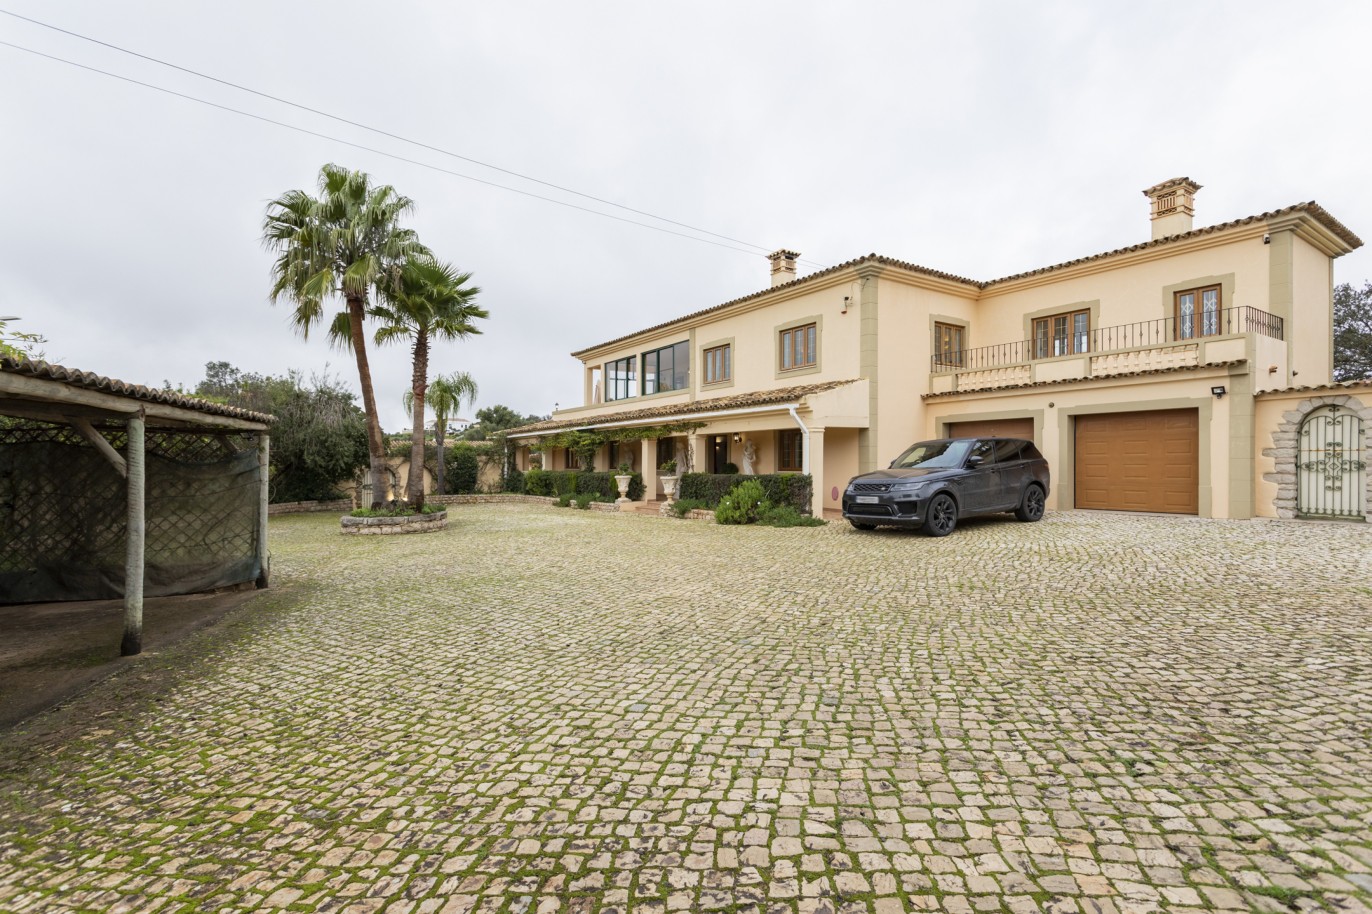 4 Bedroom Villa with swimming pool for sale in Loulé, Algarve_214799